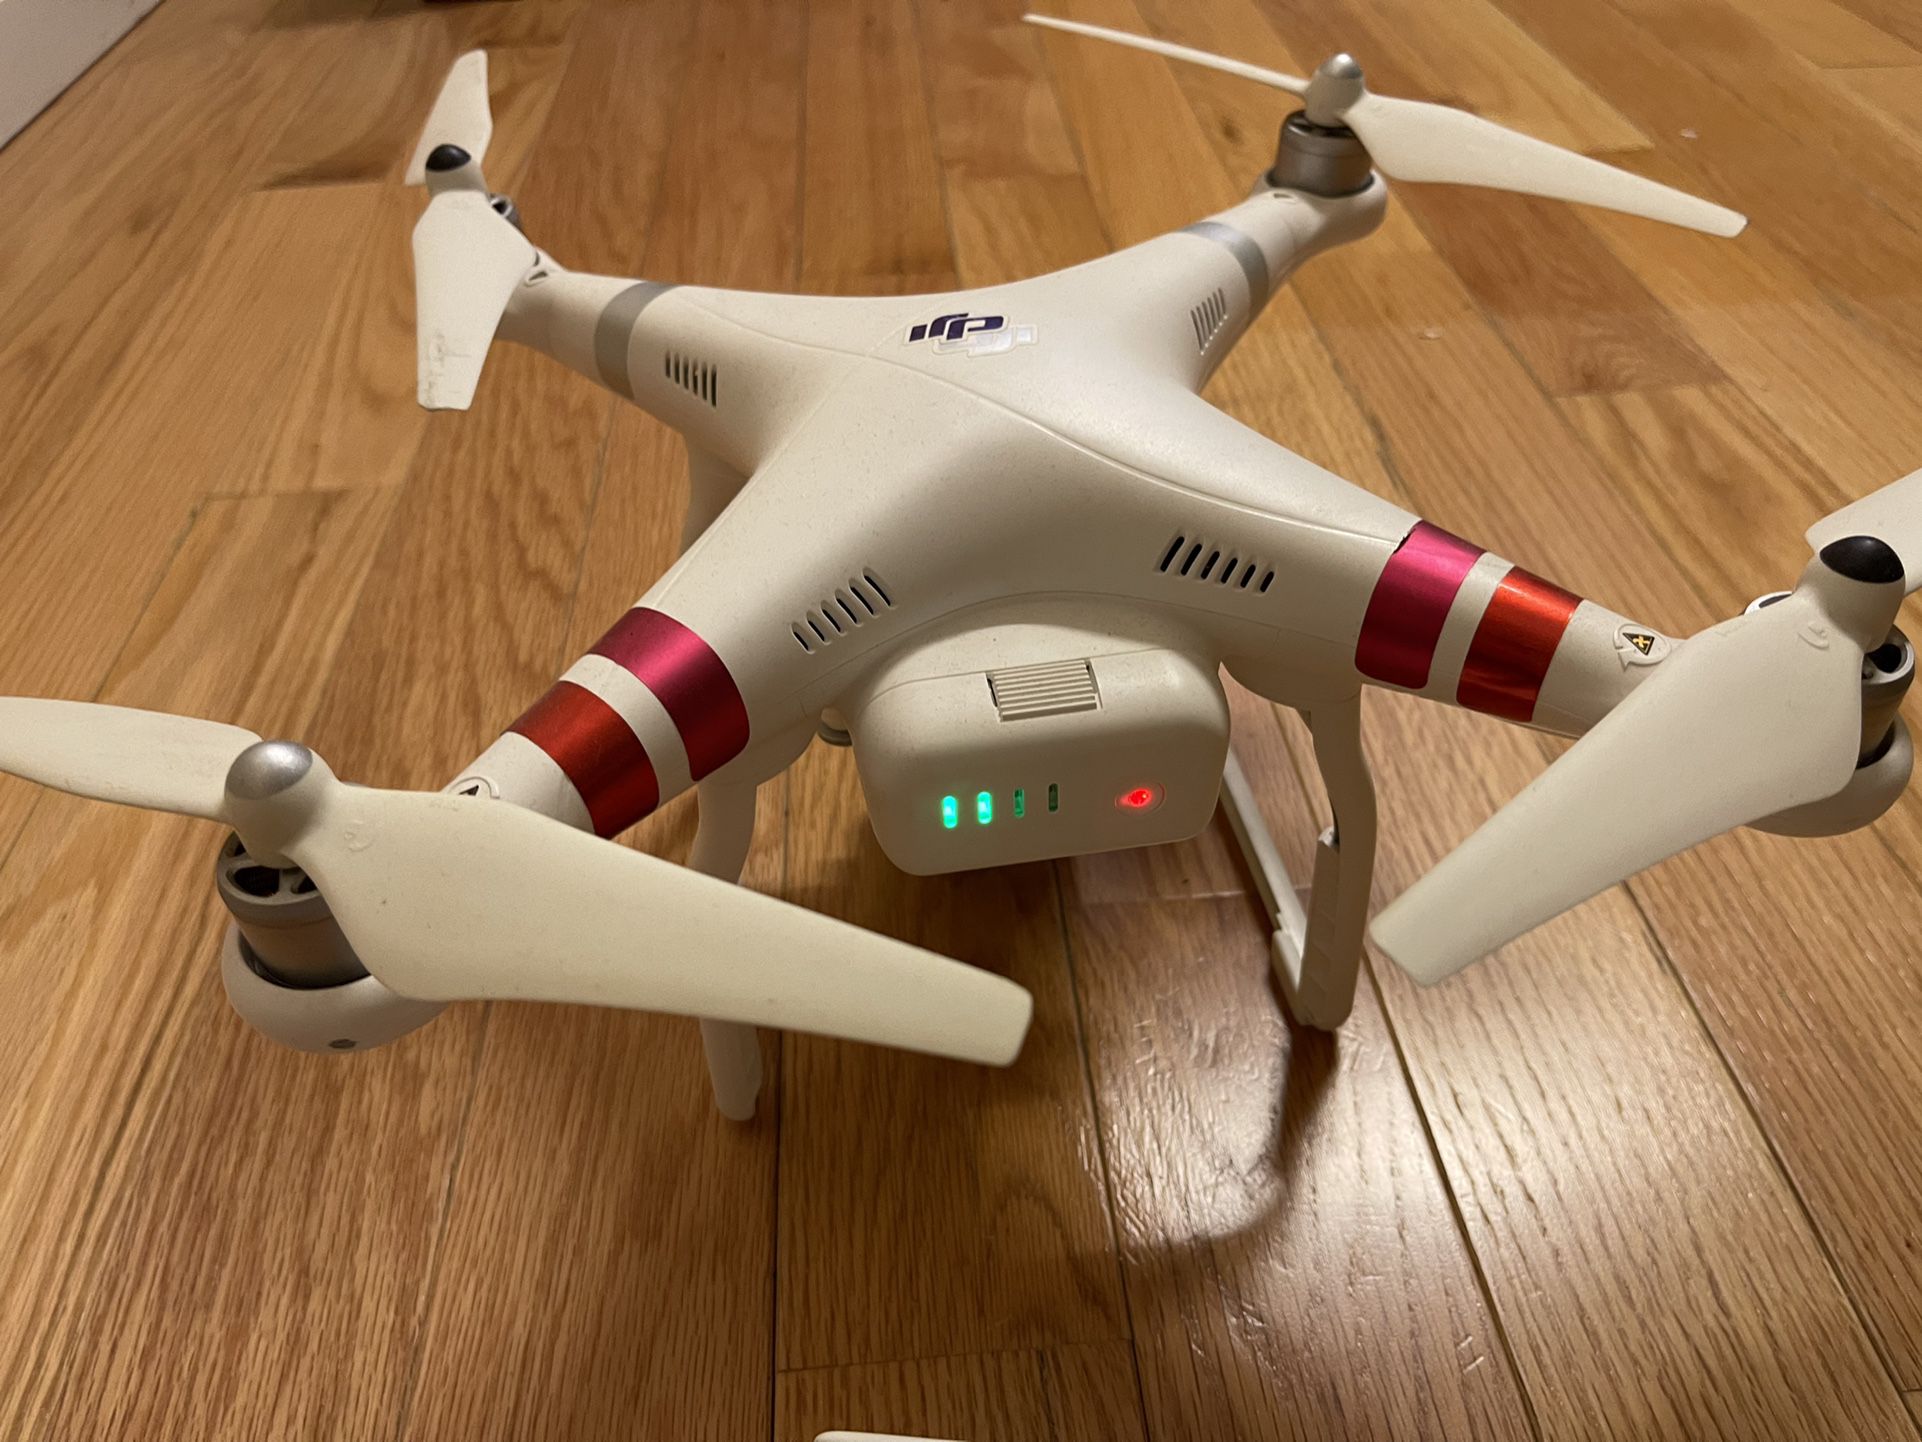 For Sale: DJI Phantom 3 Advanced Drone – Like New, Only Flown Twice!